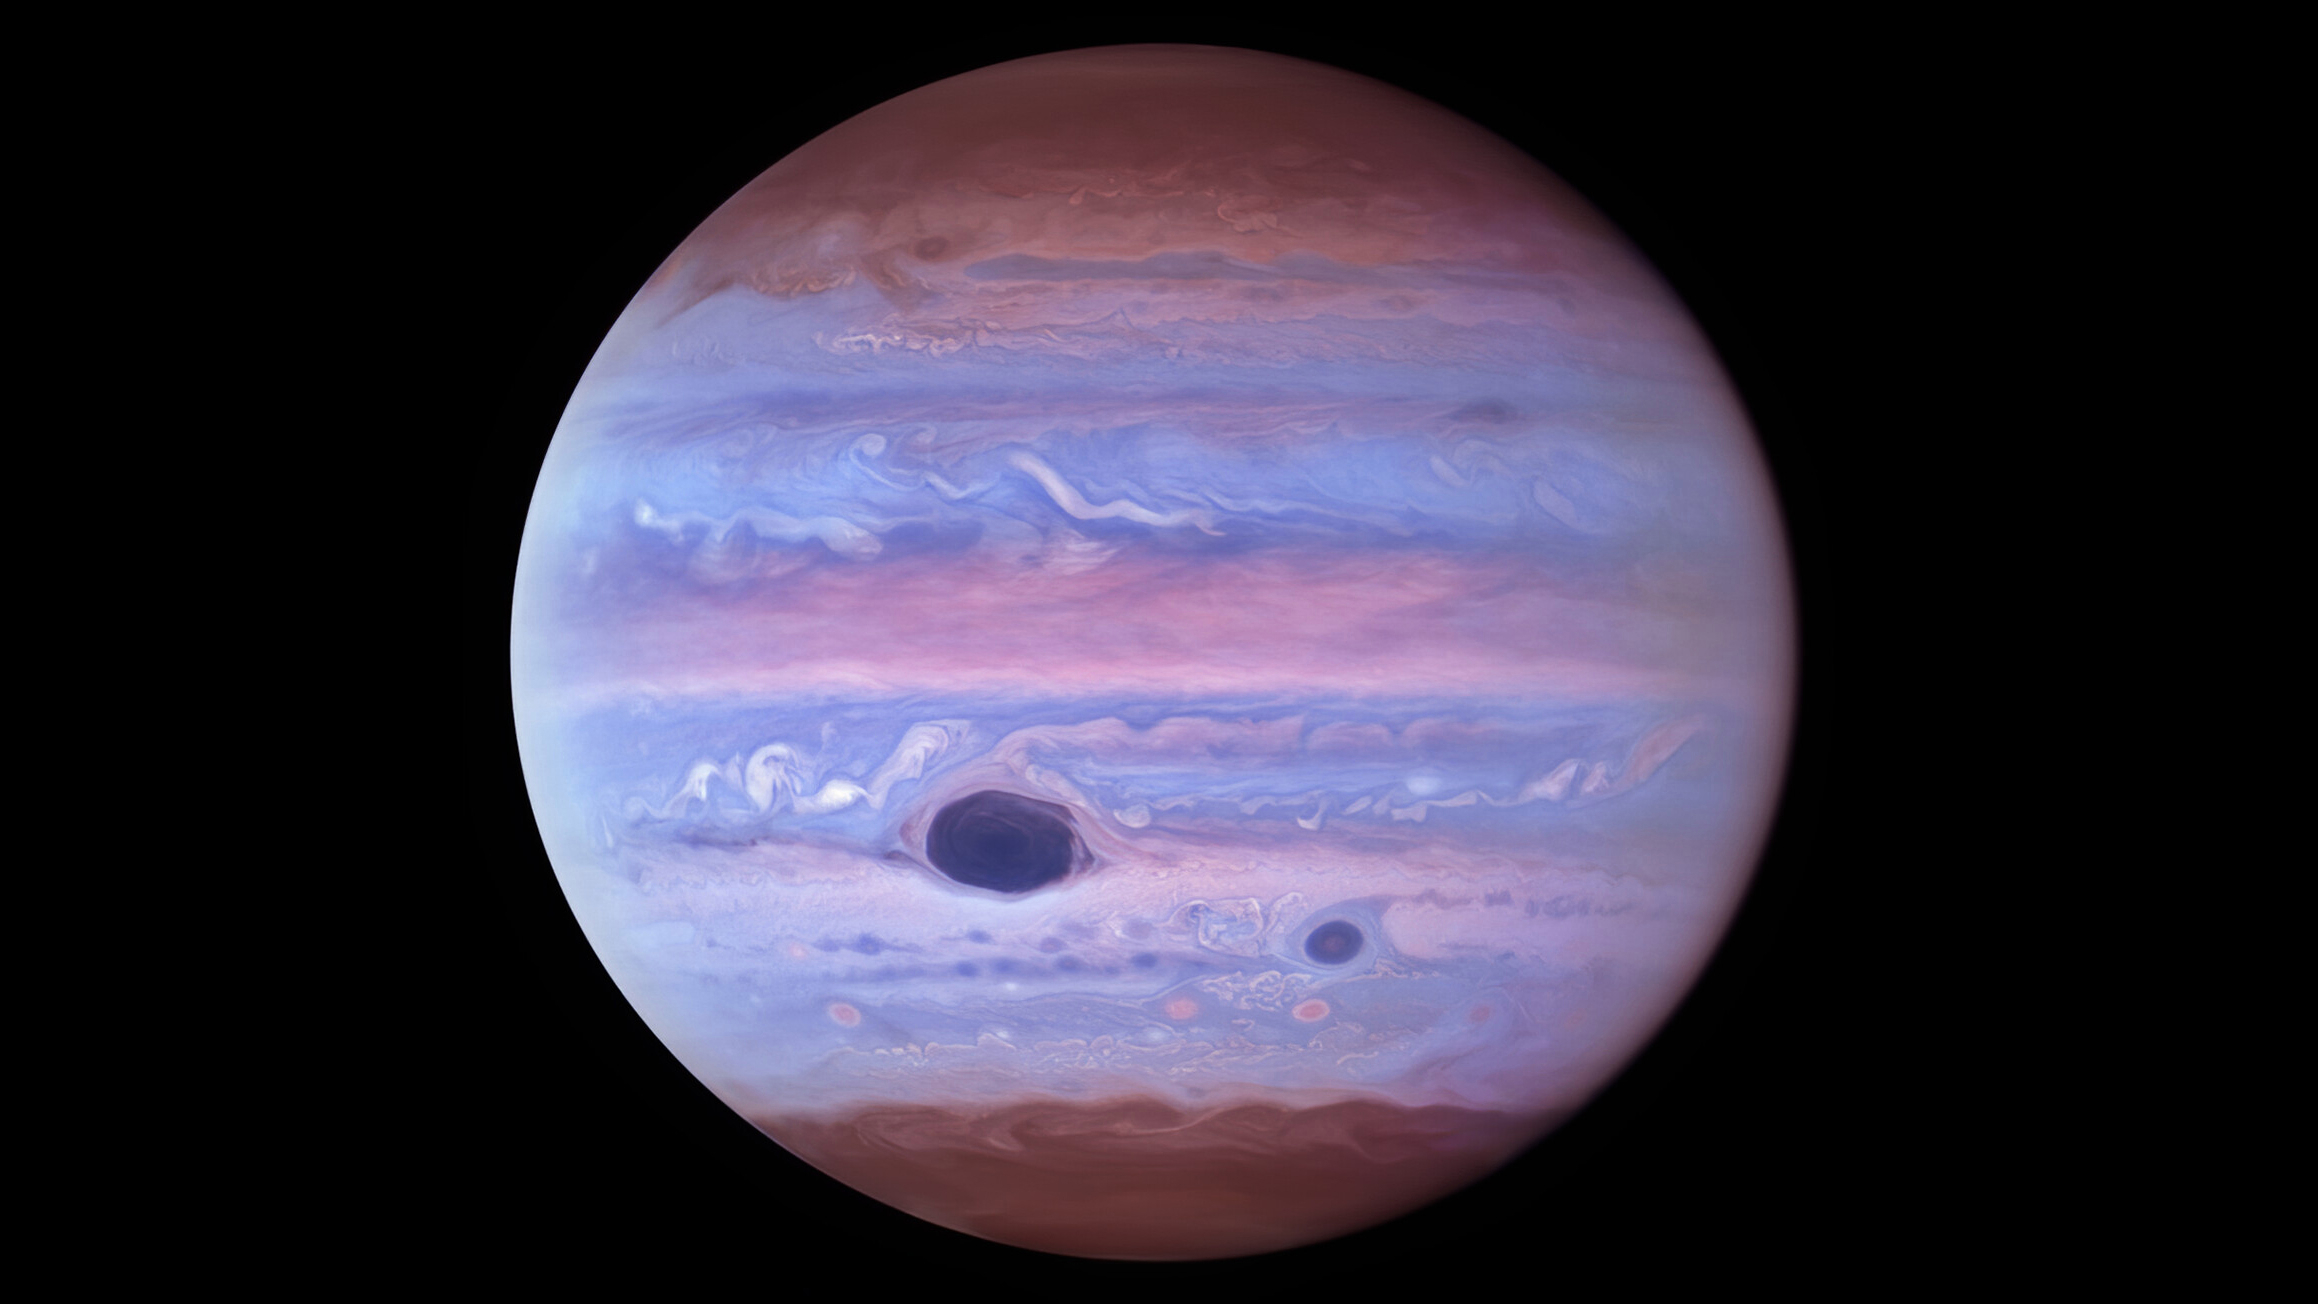 Jupiter’s atmosphere we have never seen before